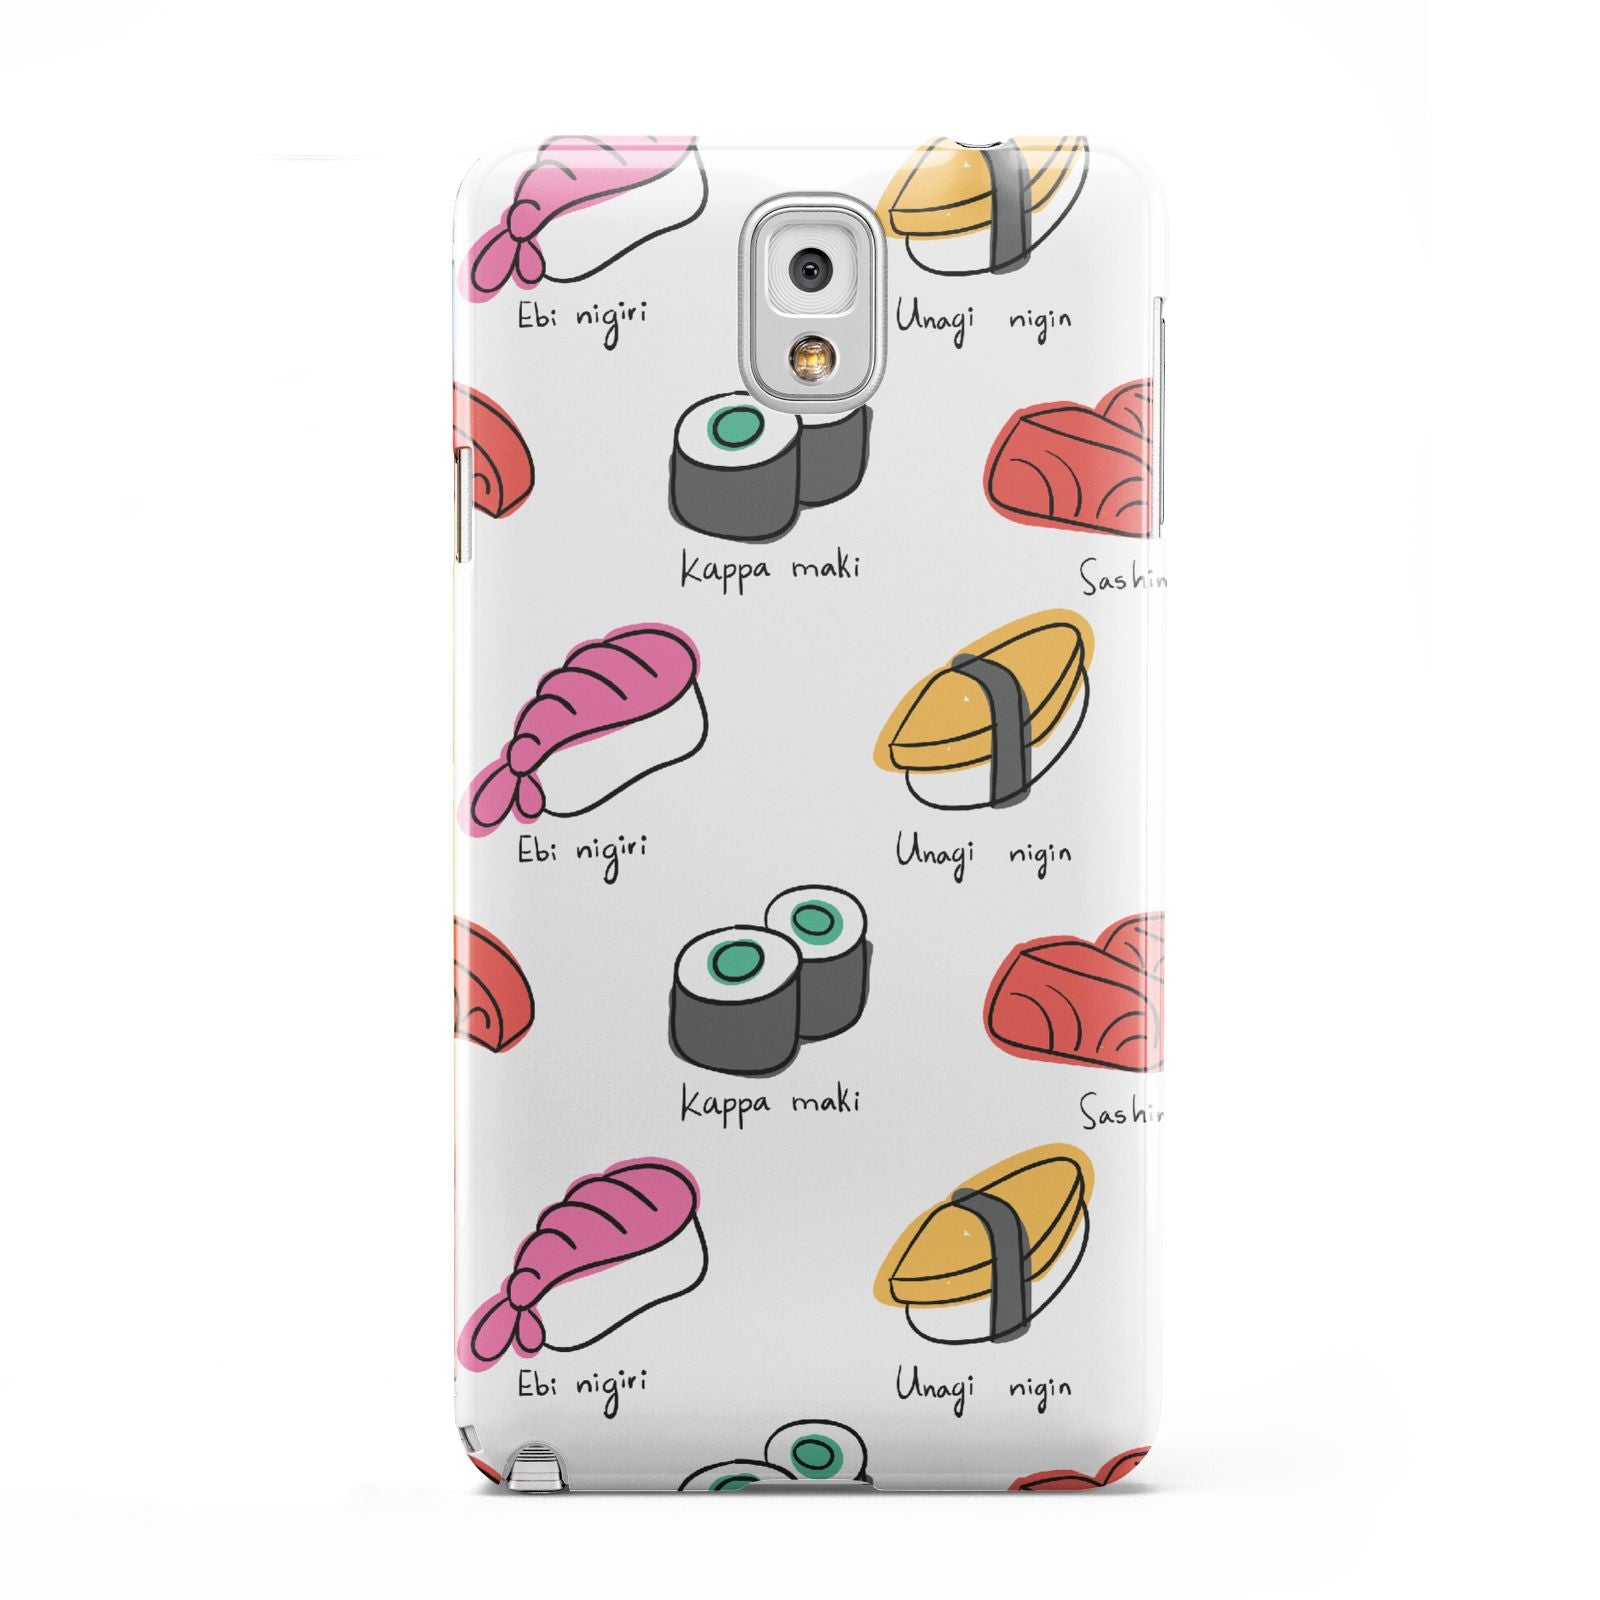 Sashimi Kappa Maki Sushi Samsung Galaxy Note 3 Case